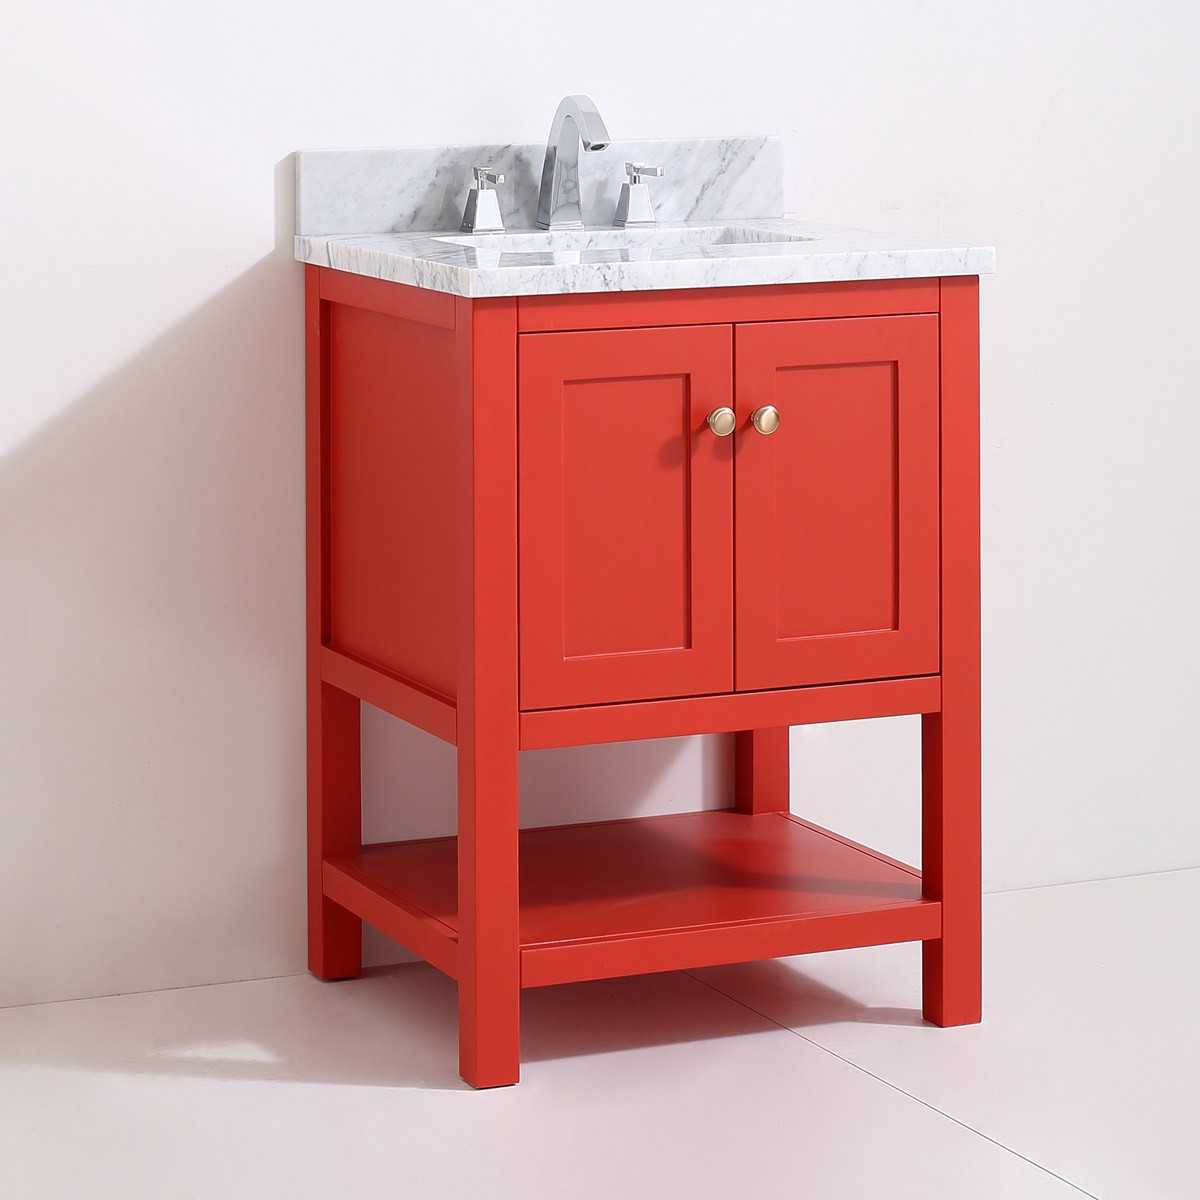 24 In. Nova Red Bathroom Cabinet - Home Magic LLC